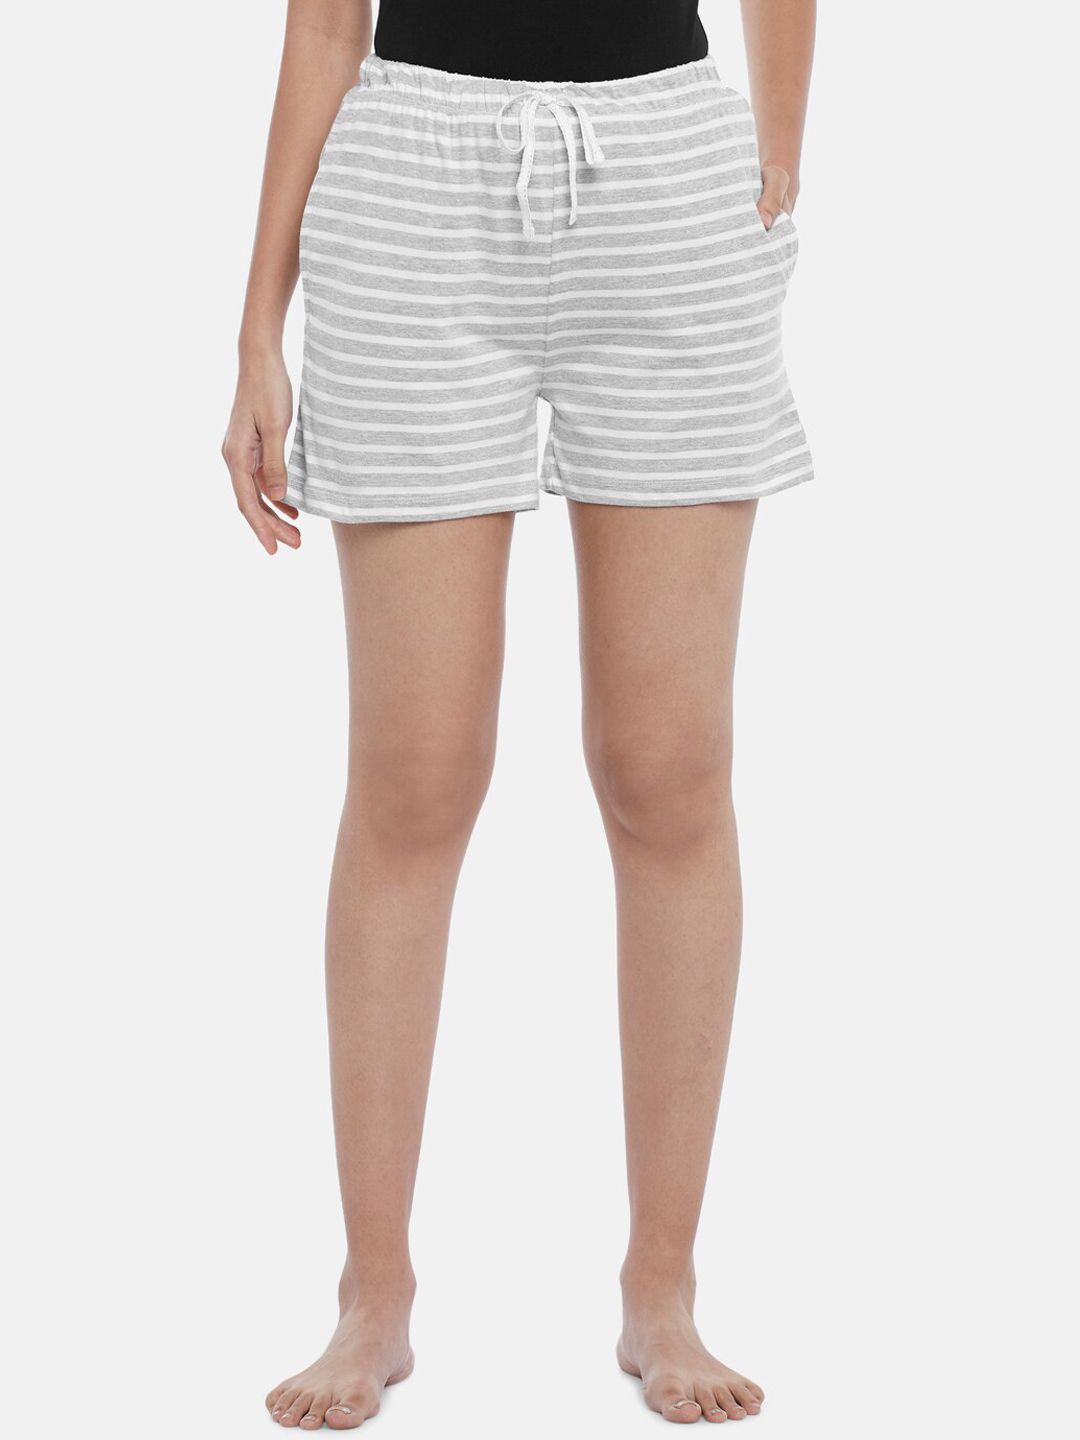 Dreamz by Pantaloons Women Grey & White Striped Cotton Lounge Shorts Price in India